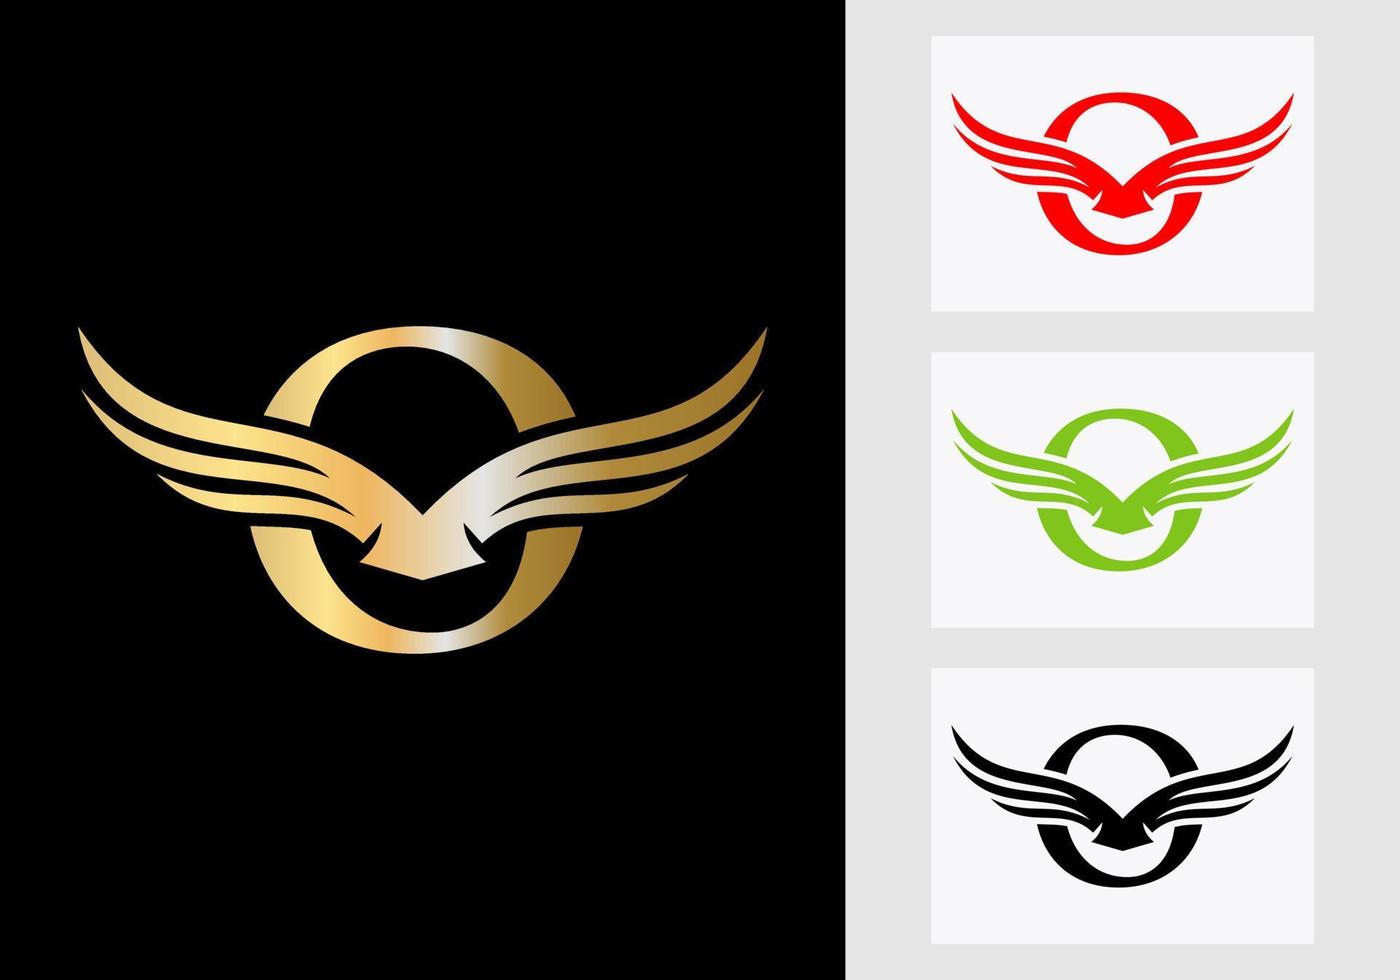 o brev vinge logotyp design. första flygande vinge symbol vektor